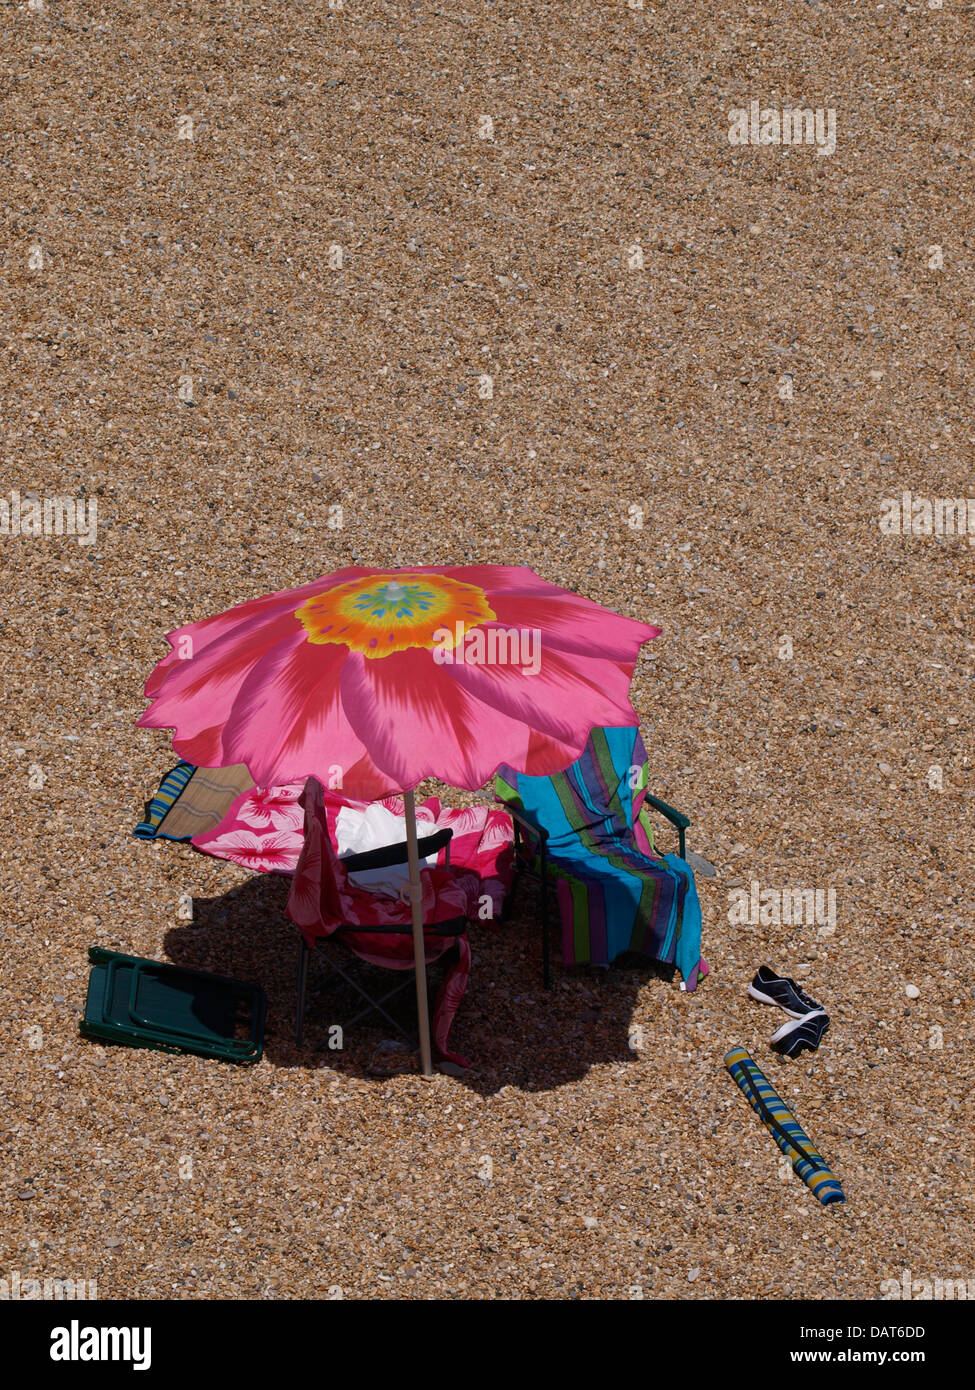 Large flower patterned sun umbrella at the beach, Devon, UK 2013 Stock Photo